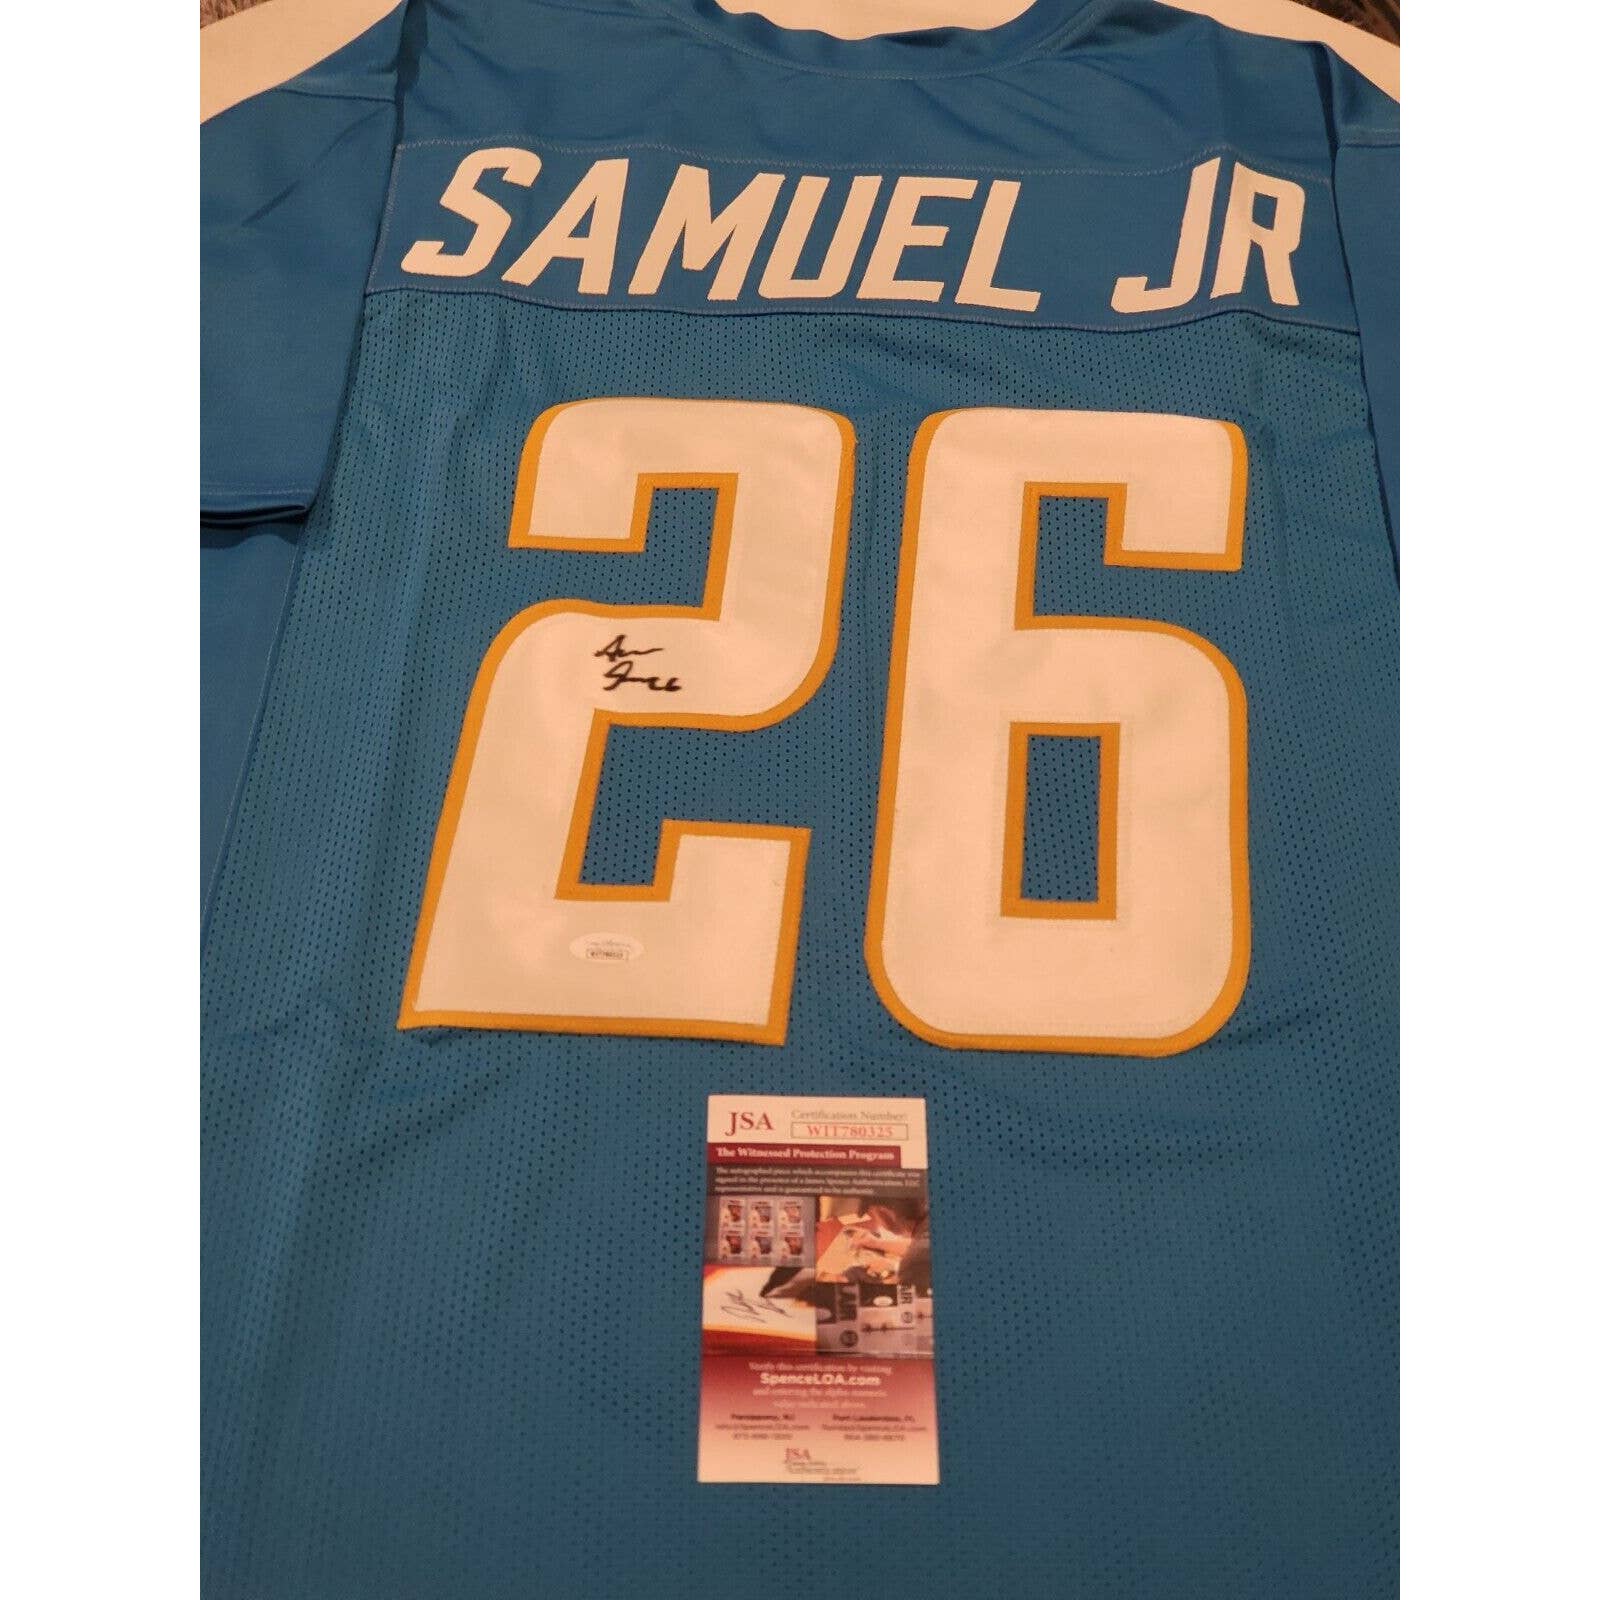 Asante Samuel Jr Autographed/Signed Jersey JSA COA Chargers Los Angeles LA - TreasuresEvolved